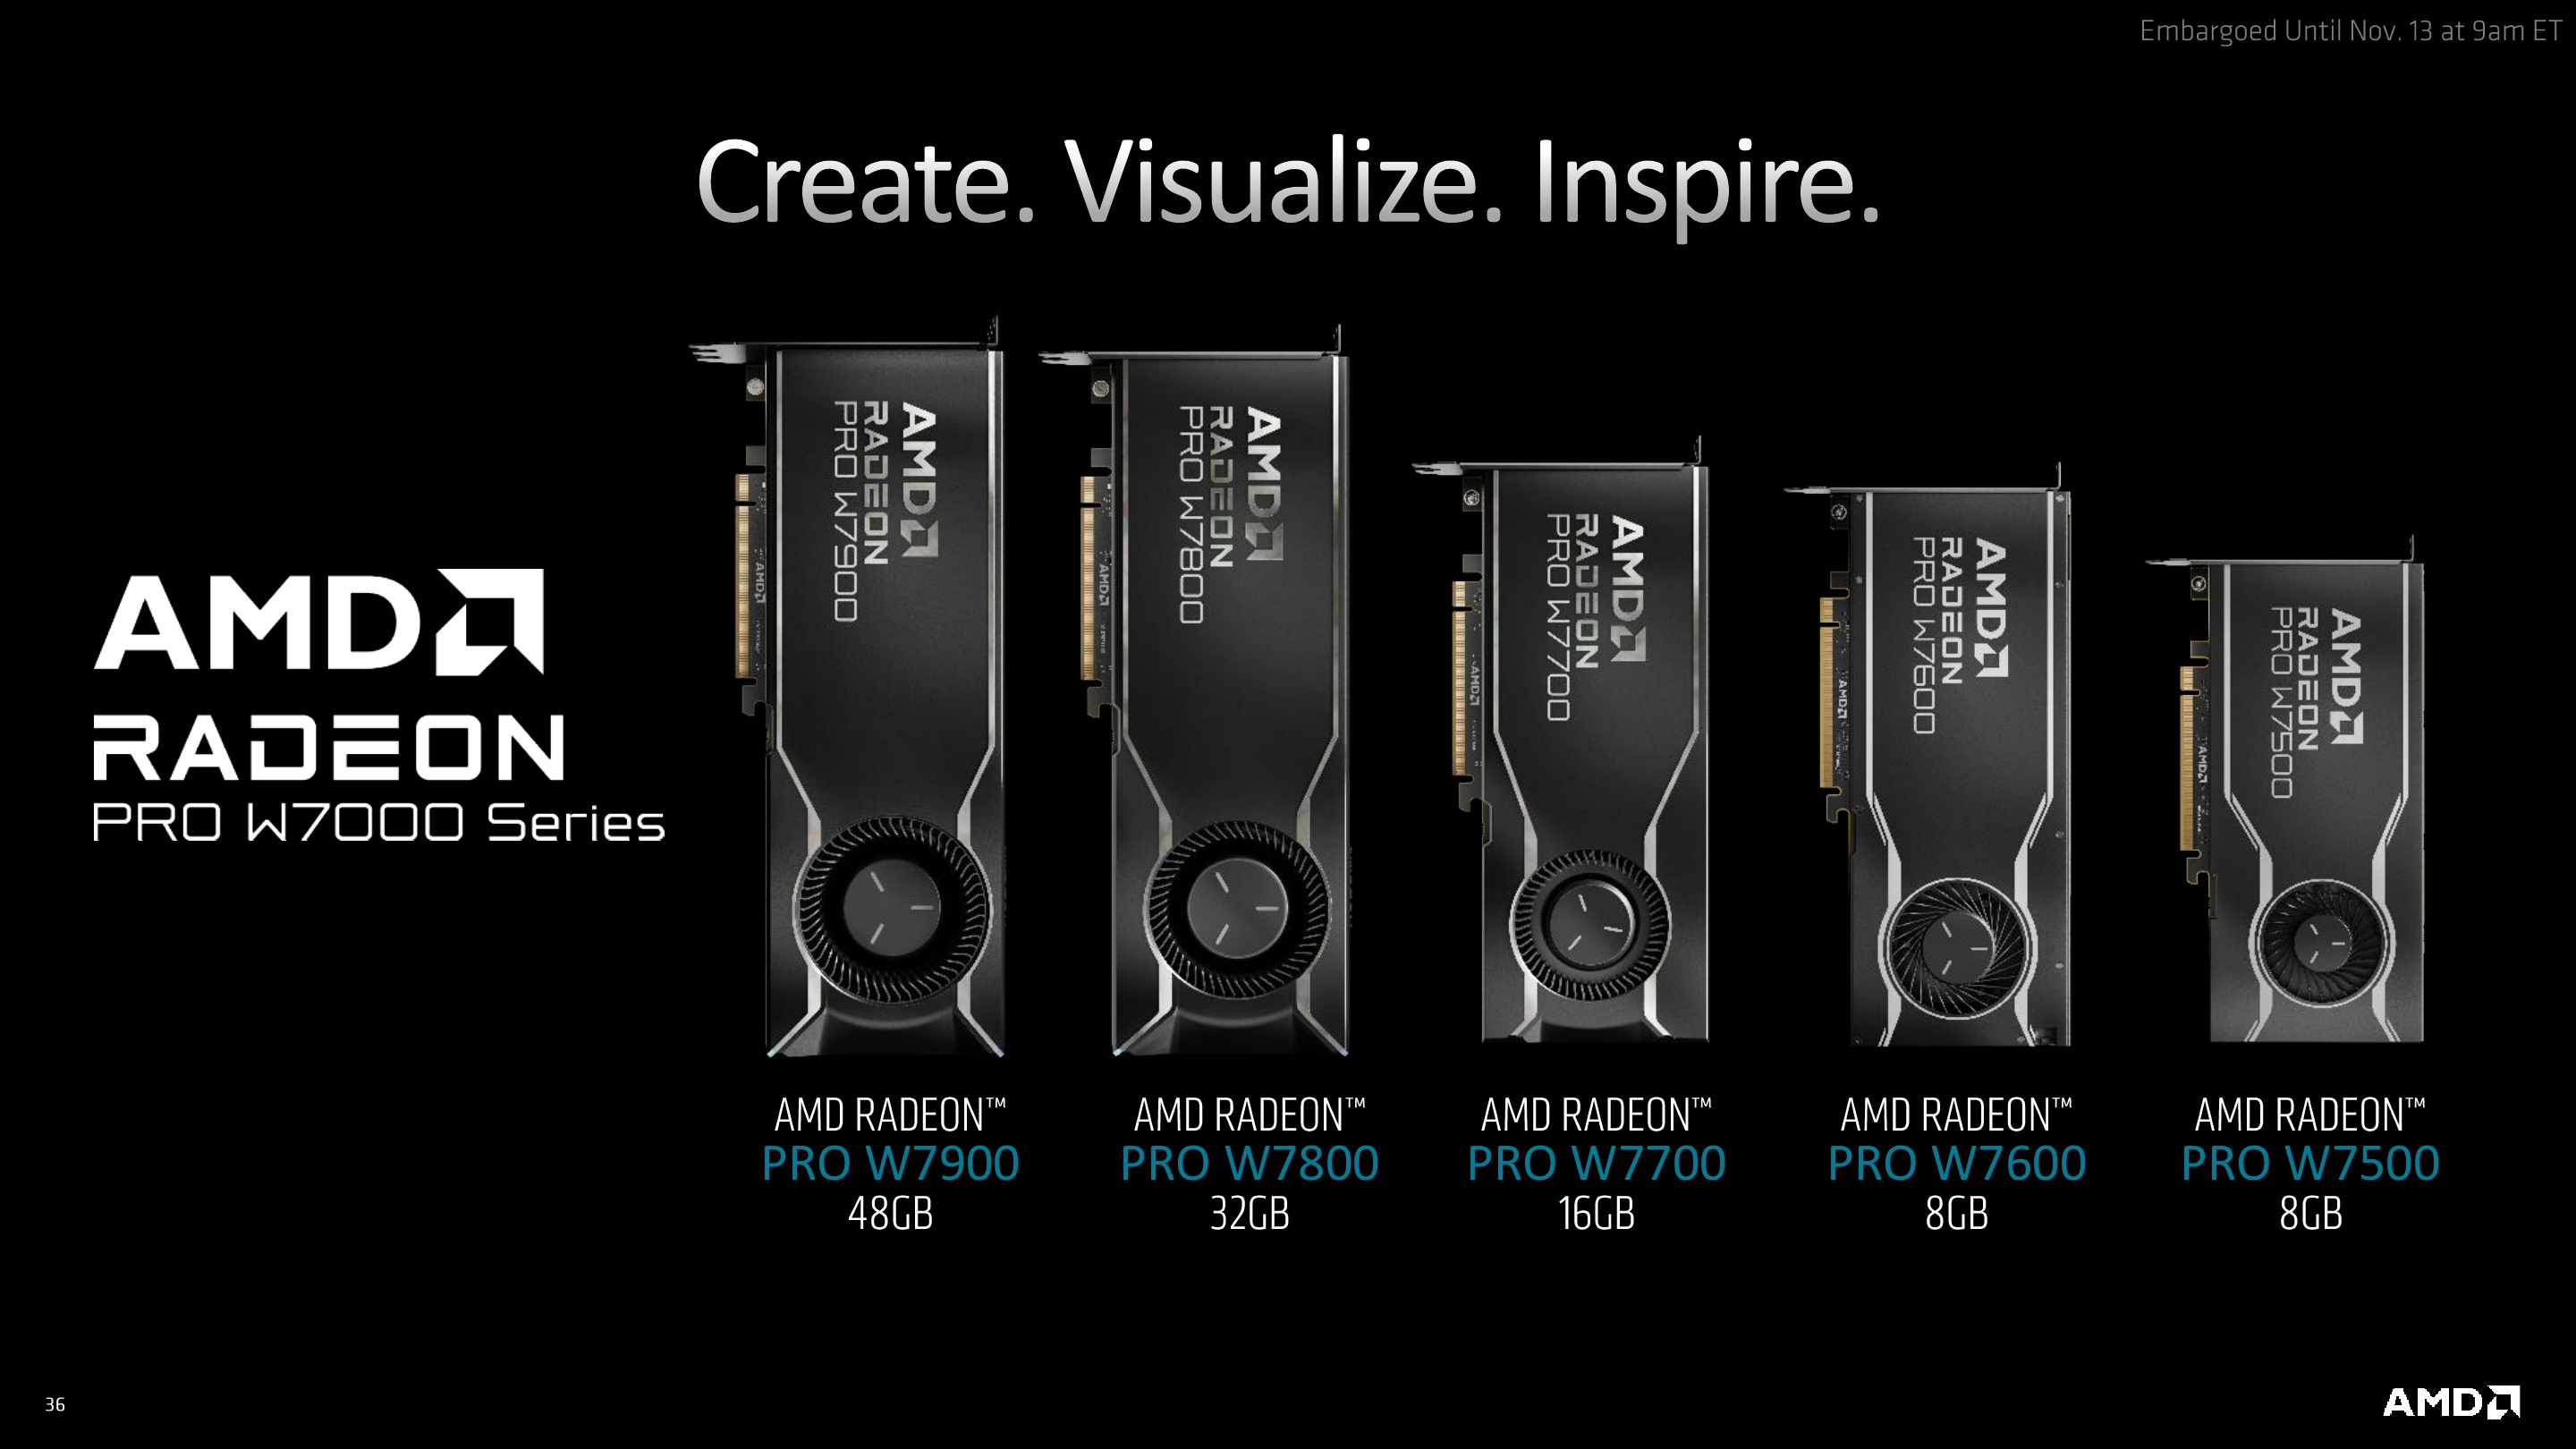 AMD Radeon PRO W7700 Press Deck - LEGAL-BRAND APPROVED_FINAL_36.jpg